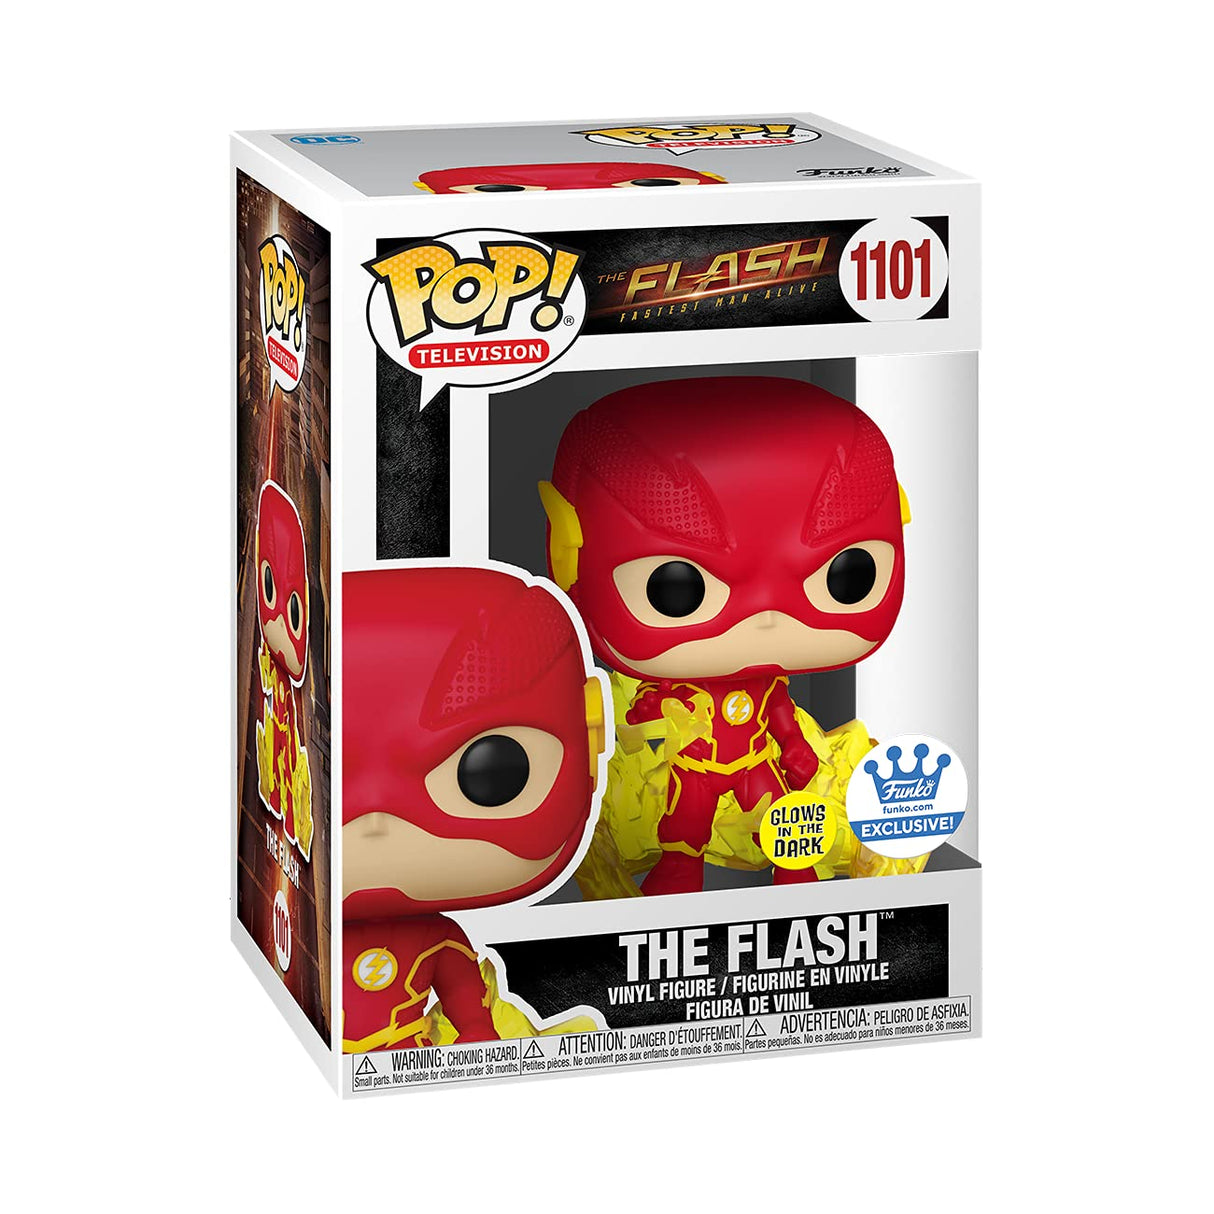 The Flash #1101 Funko Shop Pop!